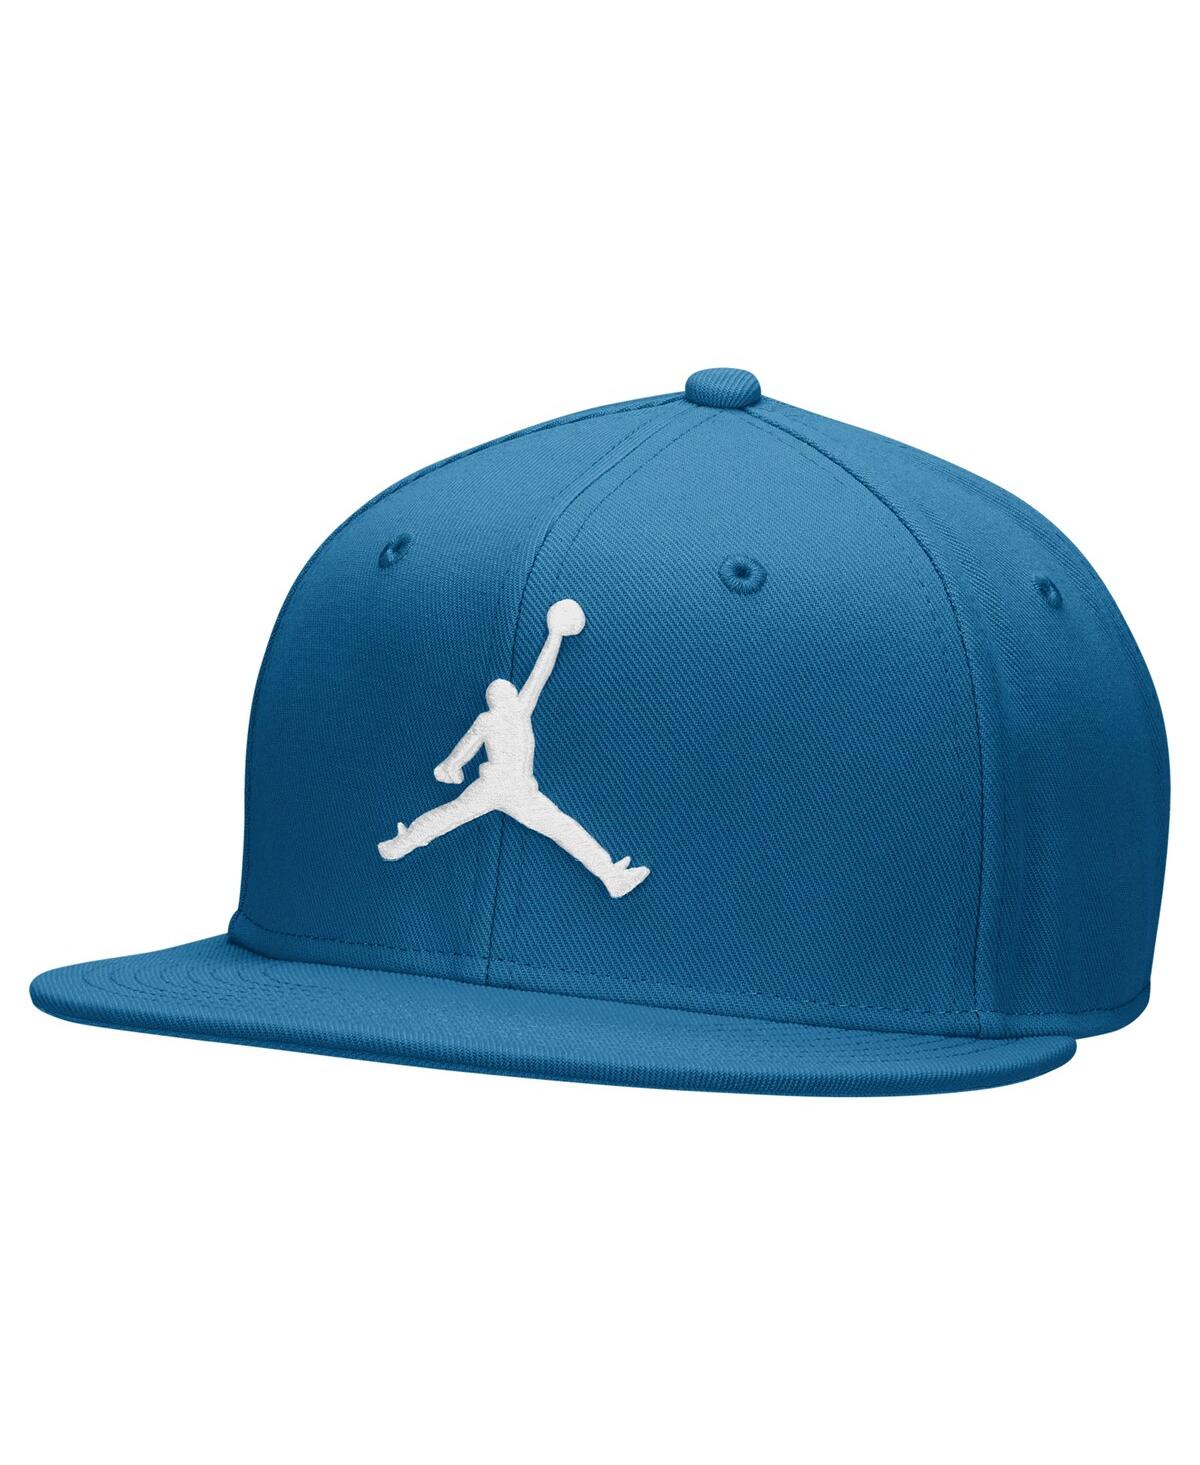 Men's Blue Pro Jumpman Snapback Hat - Blue